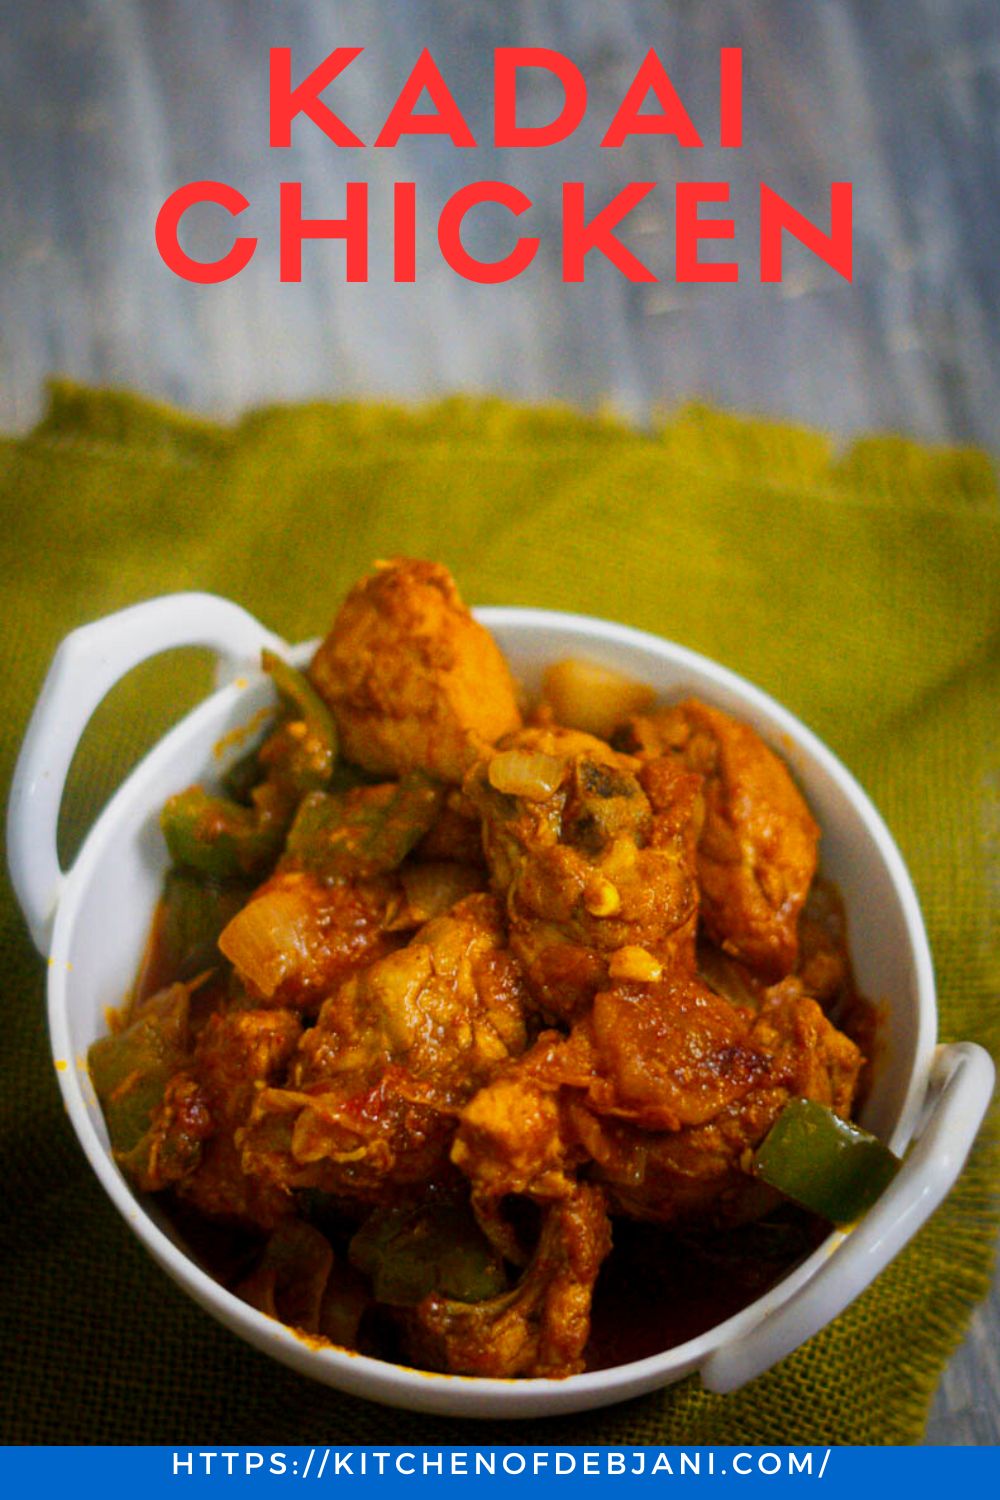 %Kadai chicken recipe debjanir rannaghar Photo Food Pinterest Pin